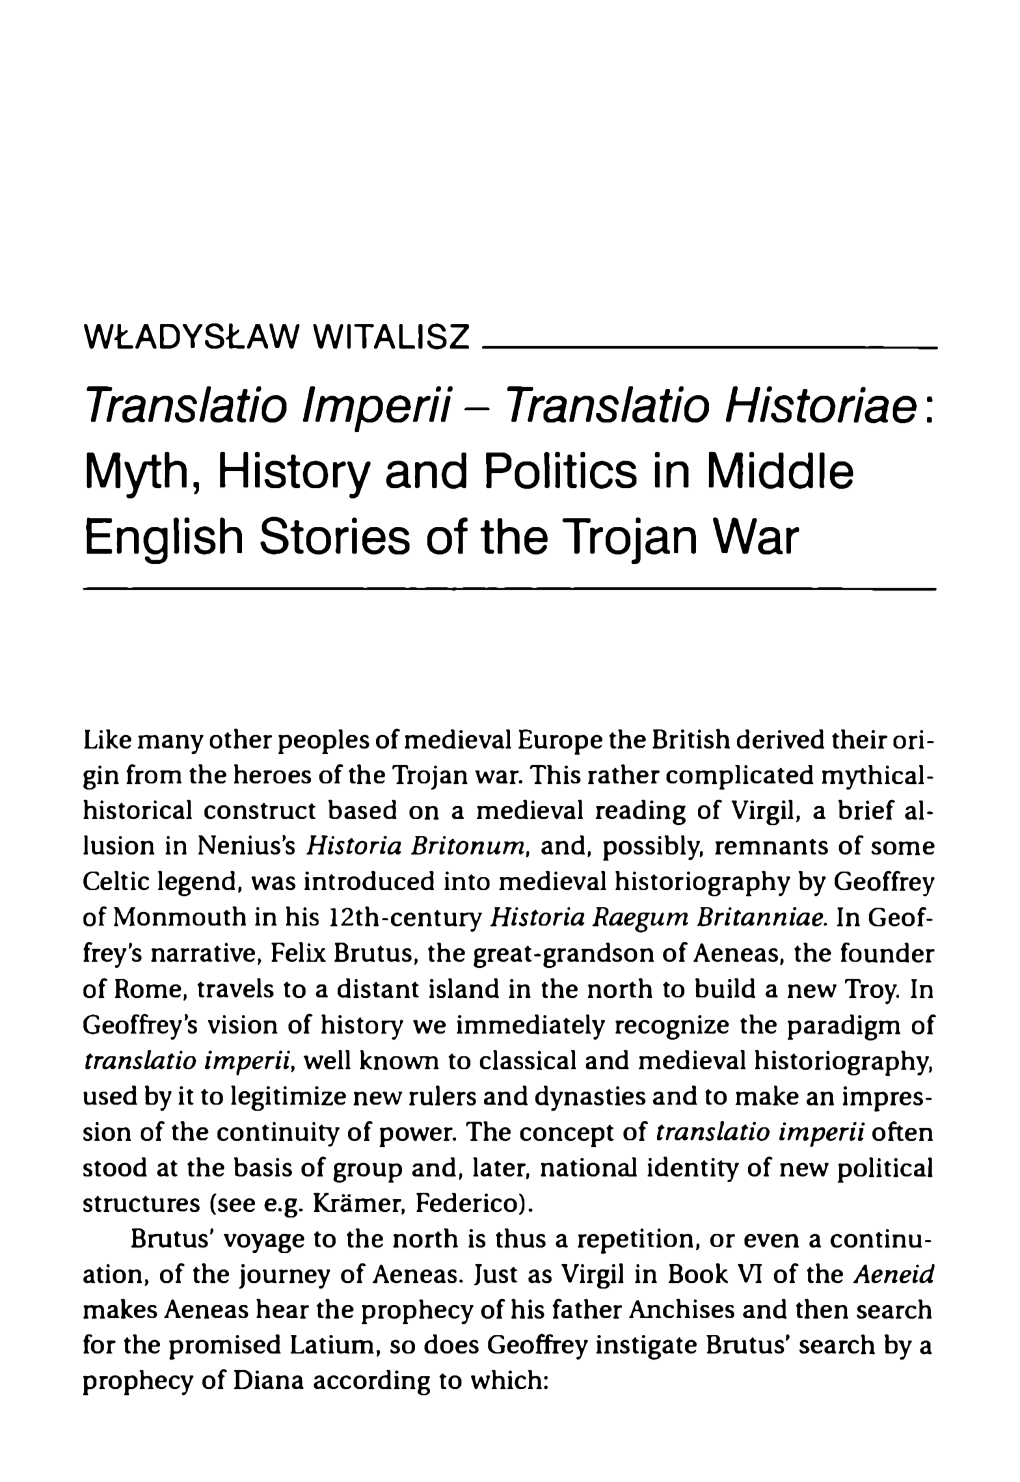 Translatio Imperii - Translatio Historiae: Myth, History and Politics in Middle English Stones of the Trojan War